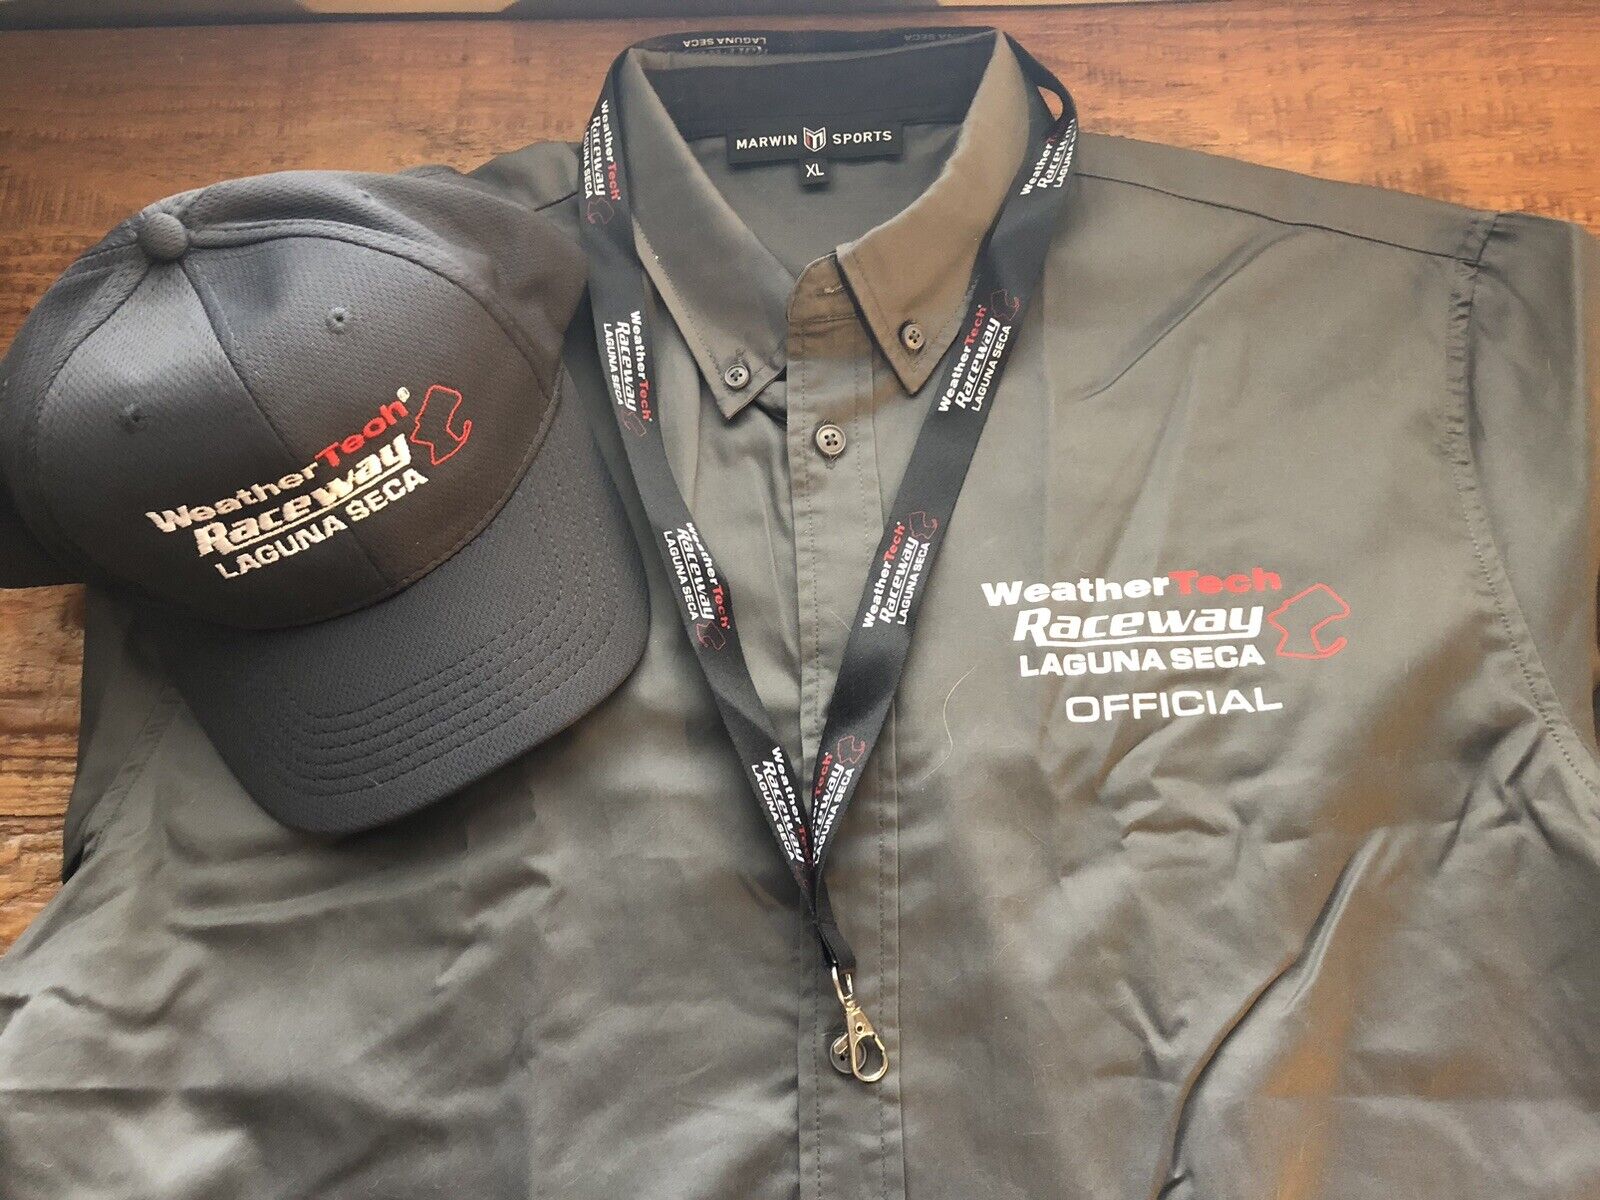 Laguna Seca Raceway XL Official’s Shirt, Hat, and Lanyard